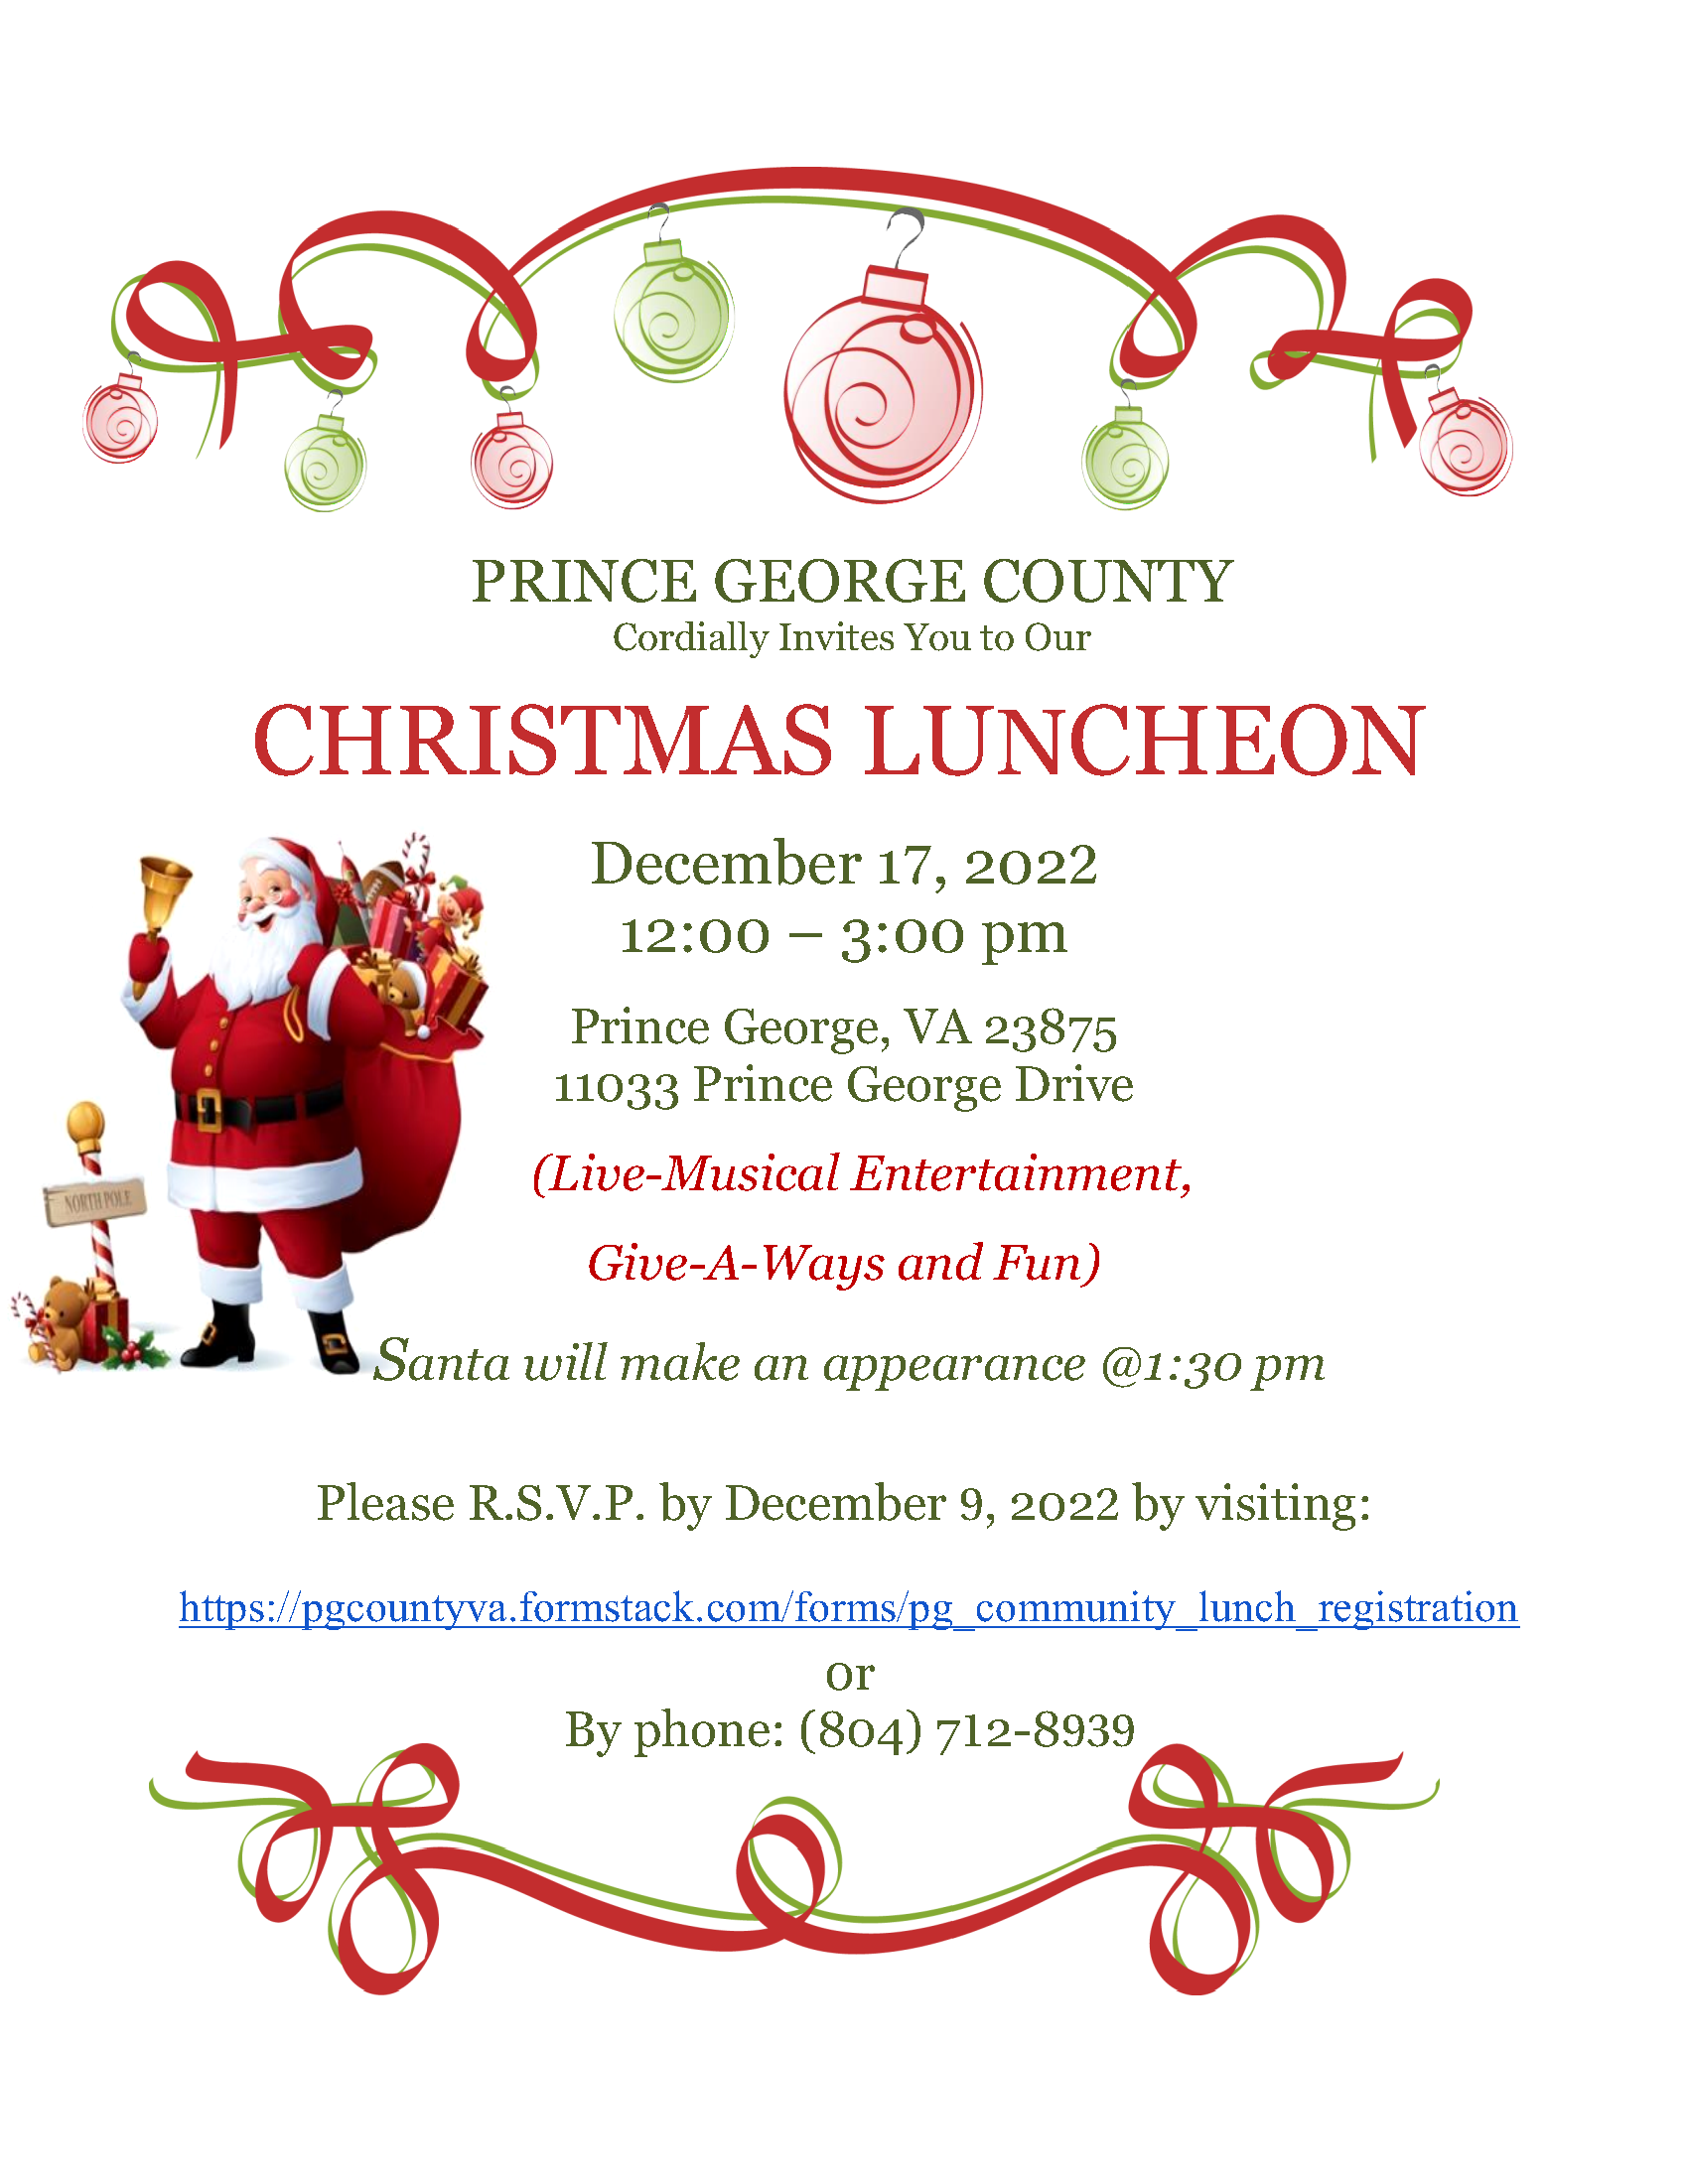 Prince George County Christmas Luncheon